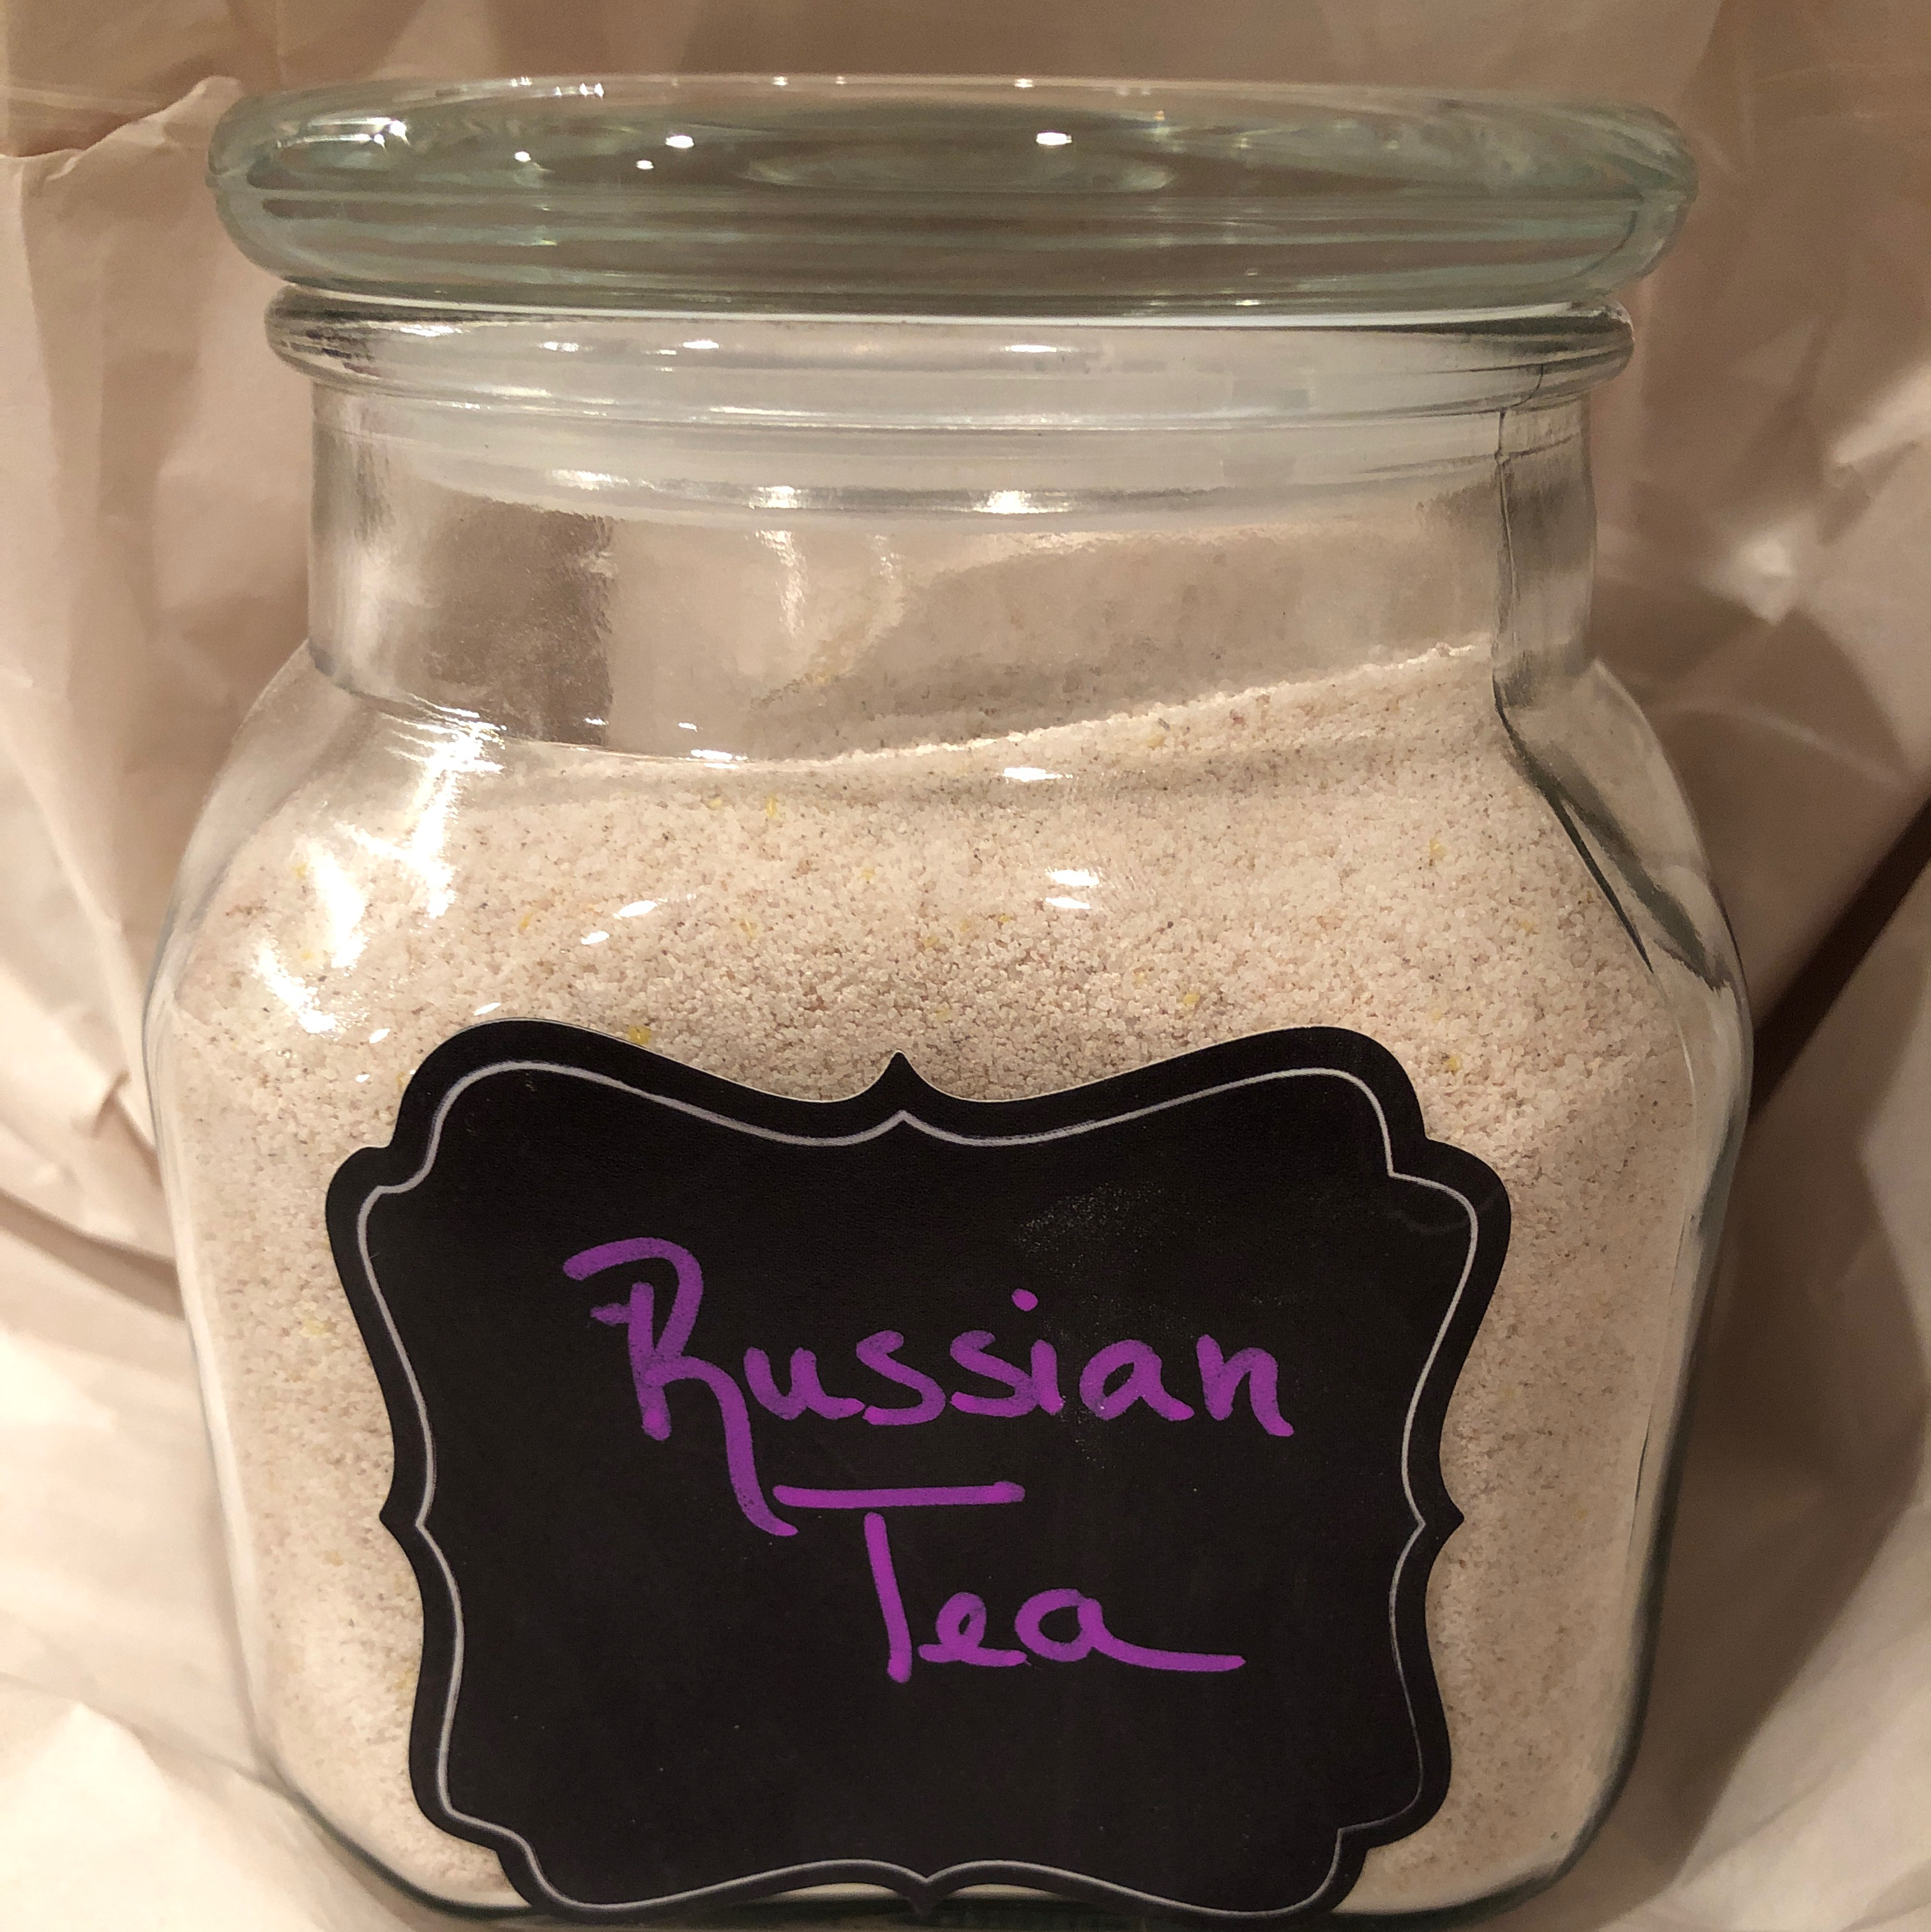 Russian Tea pararuby